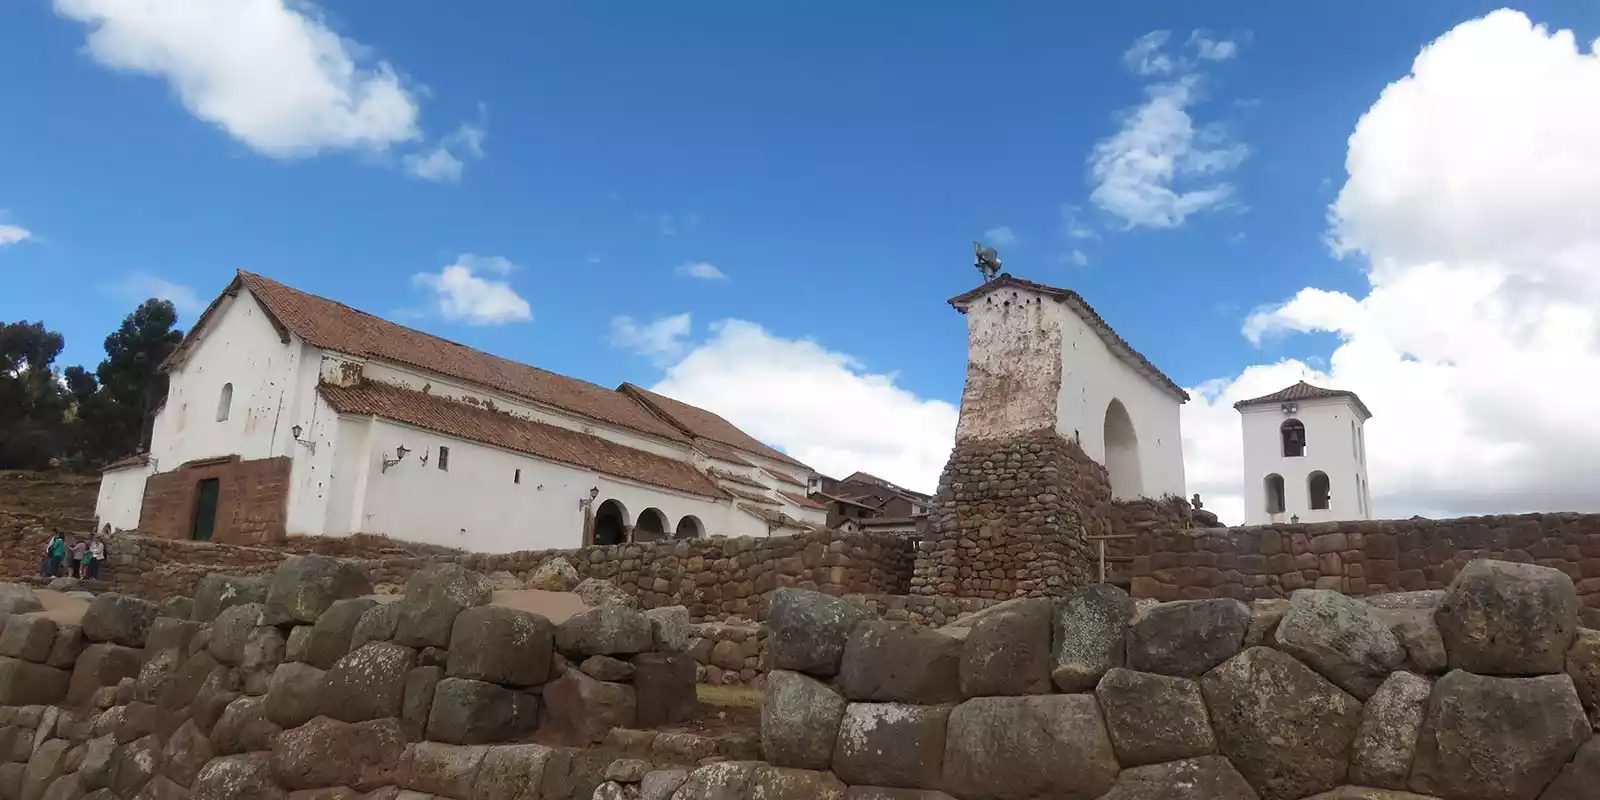 Chinchero town in Cusco